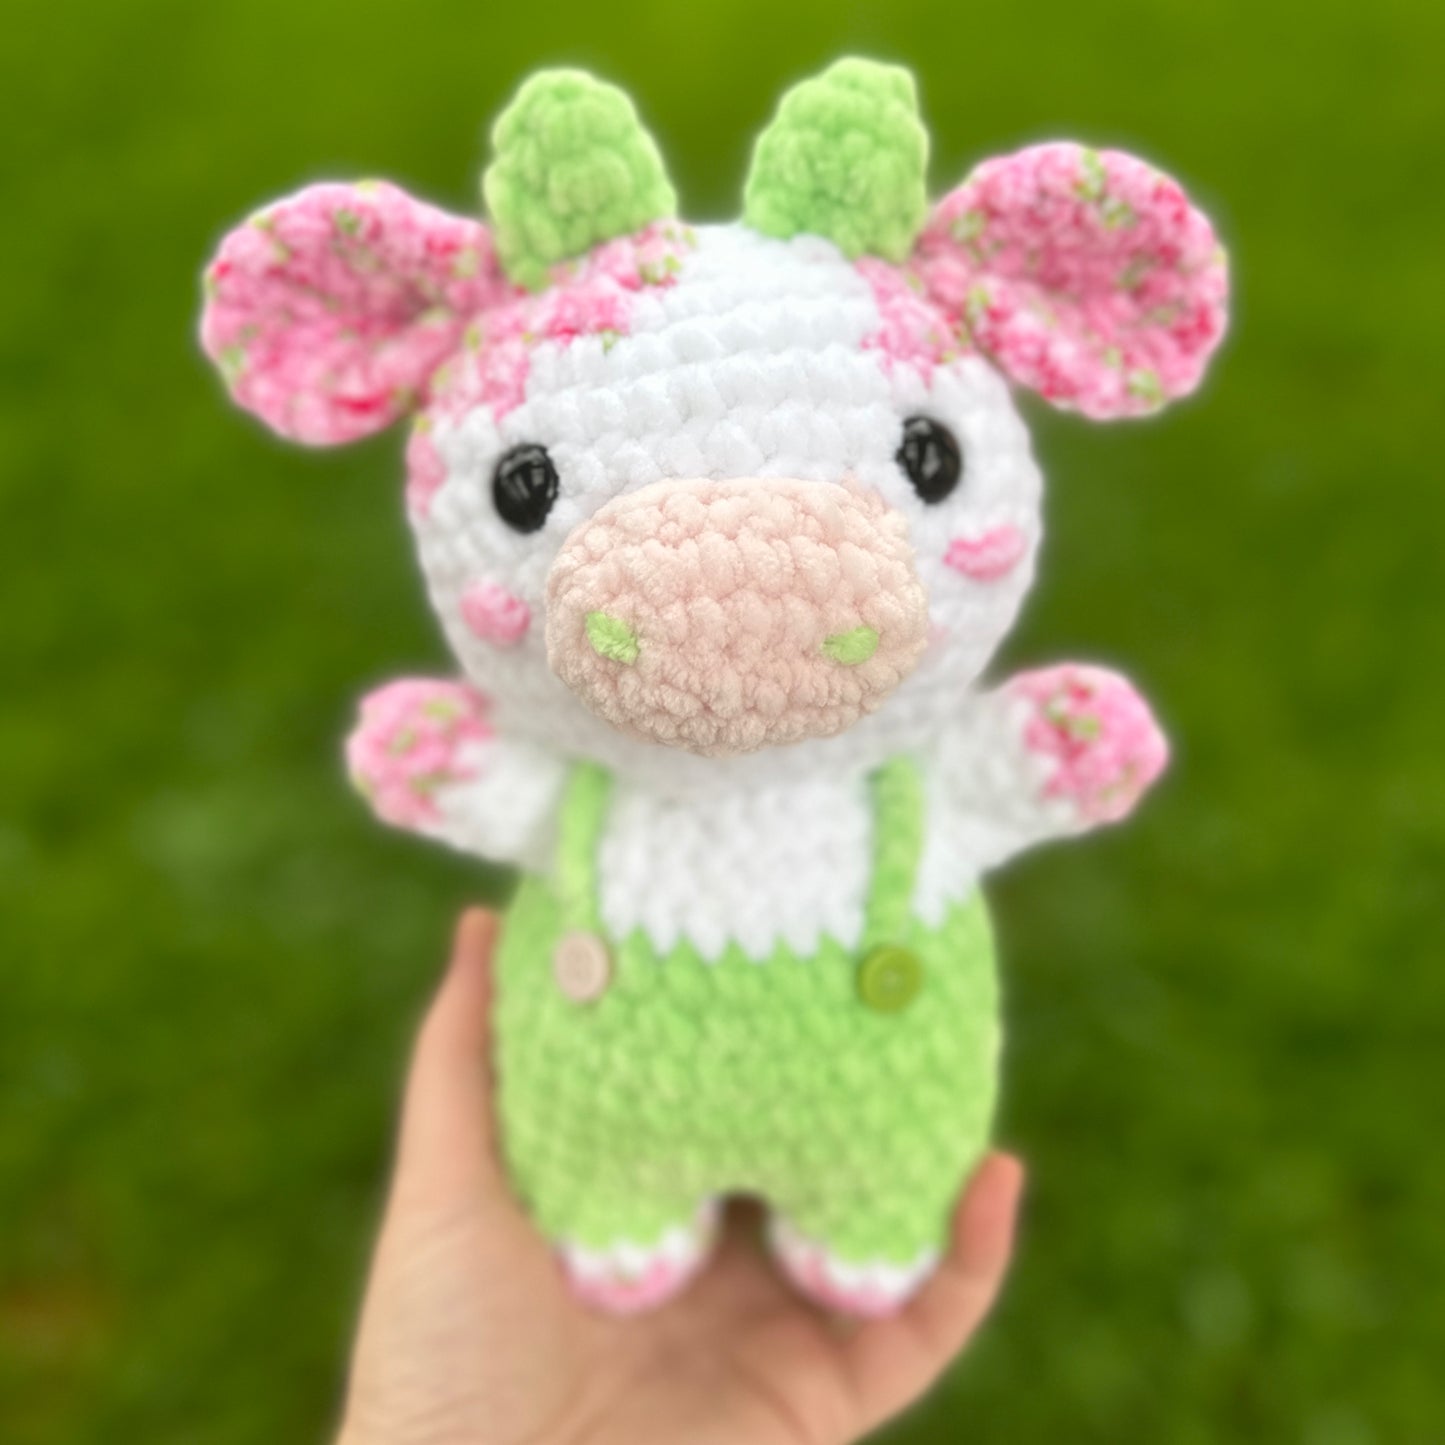 MADE TO ORDER ~Custom Style~ Milkshake the Cow 🐮 Amigurumi Crochet Plushie